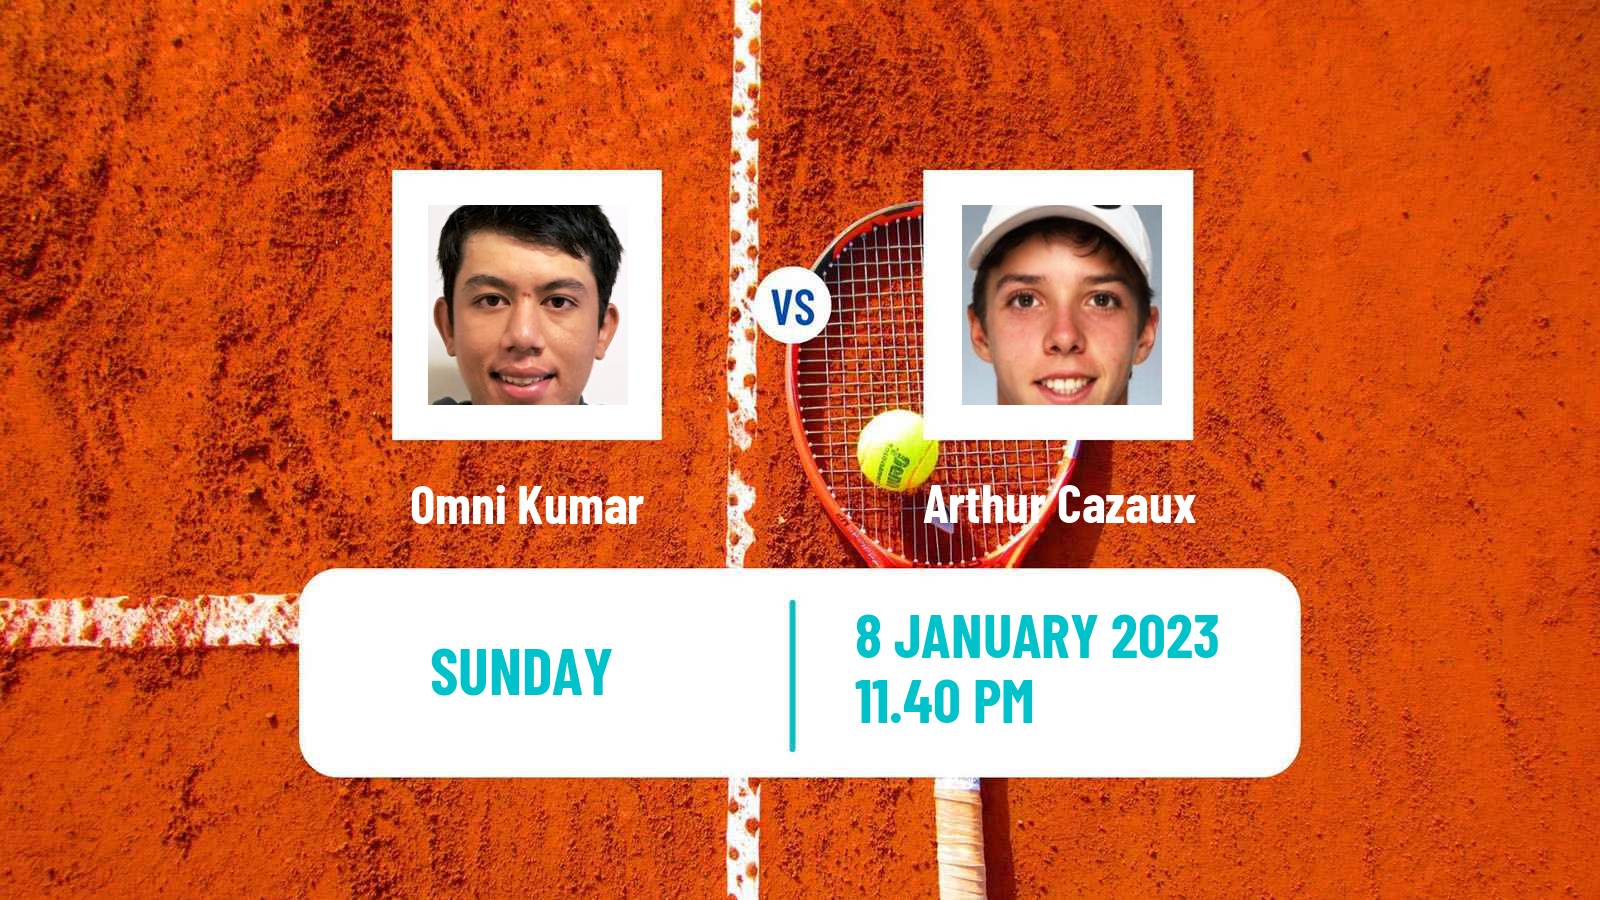 Tennis ATP Challenger Omni Kumar - Arthur Cazaux